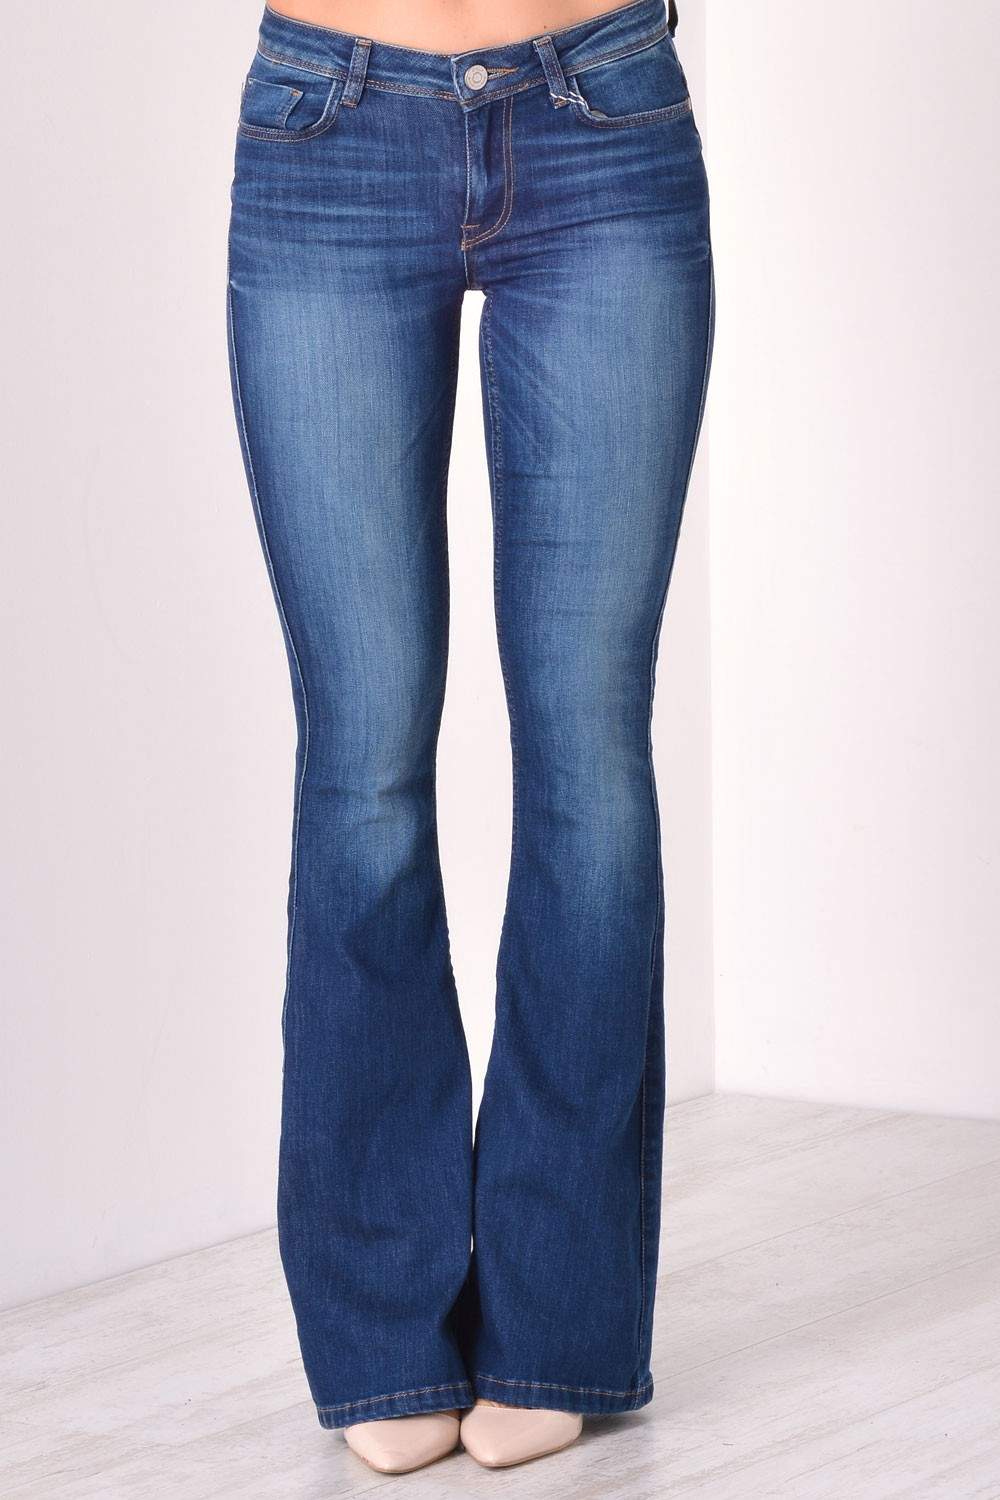 Only Gigi Short Length Flared Jeans | iCLOTHING